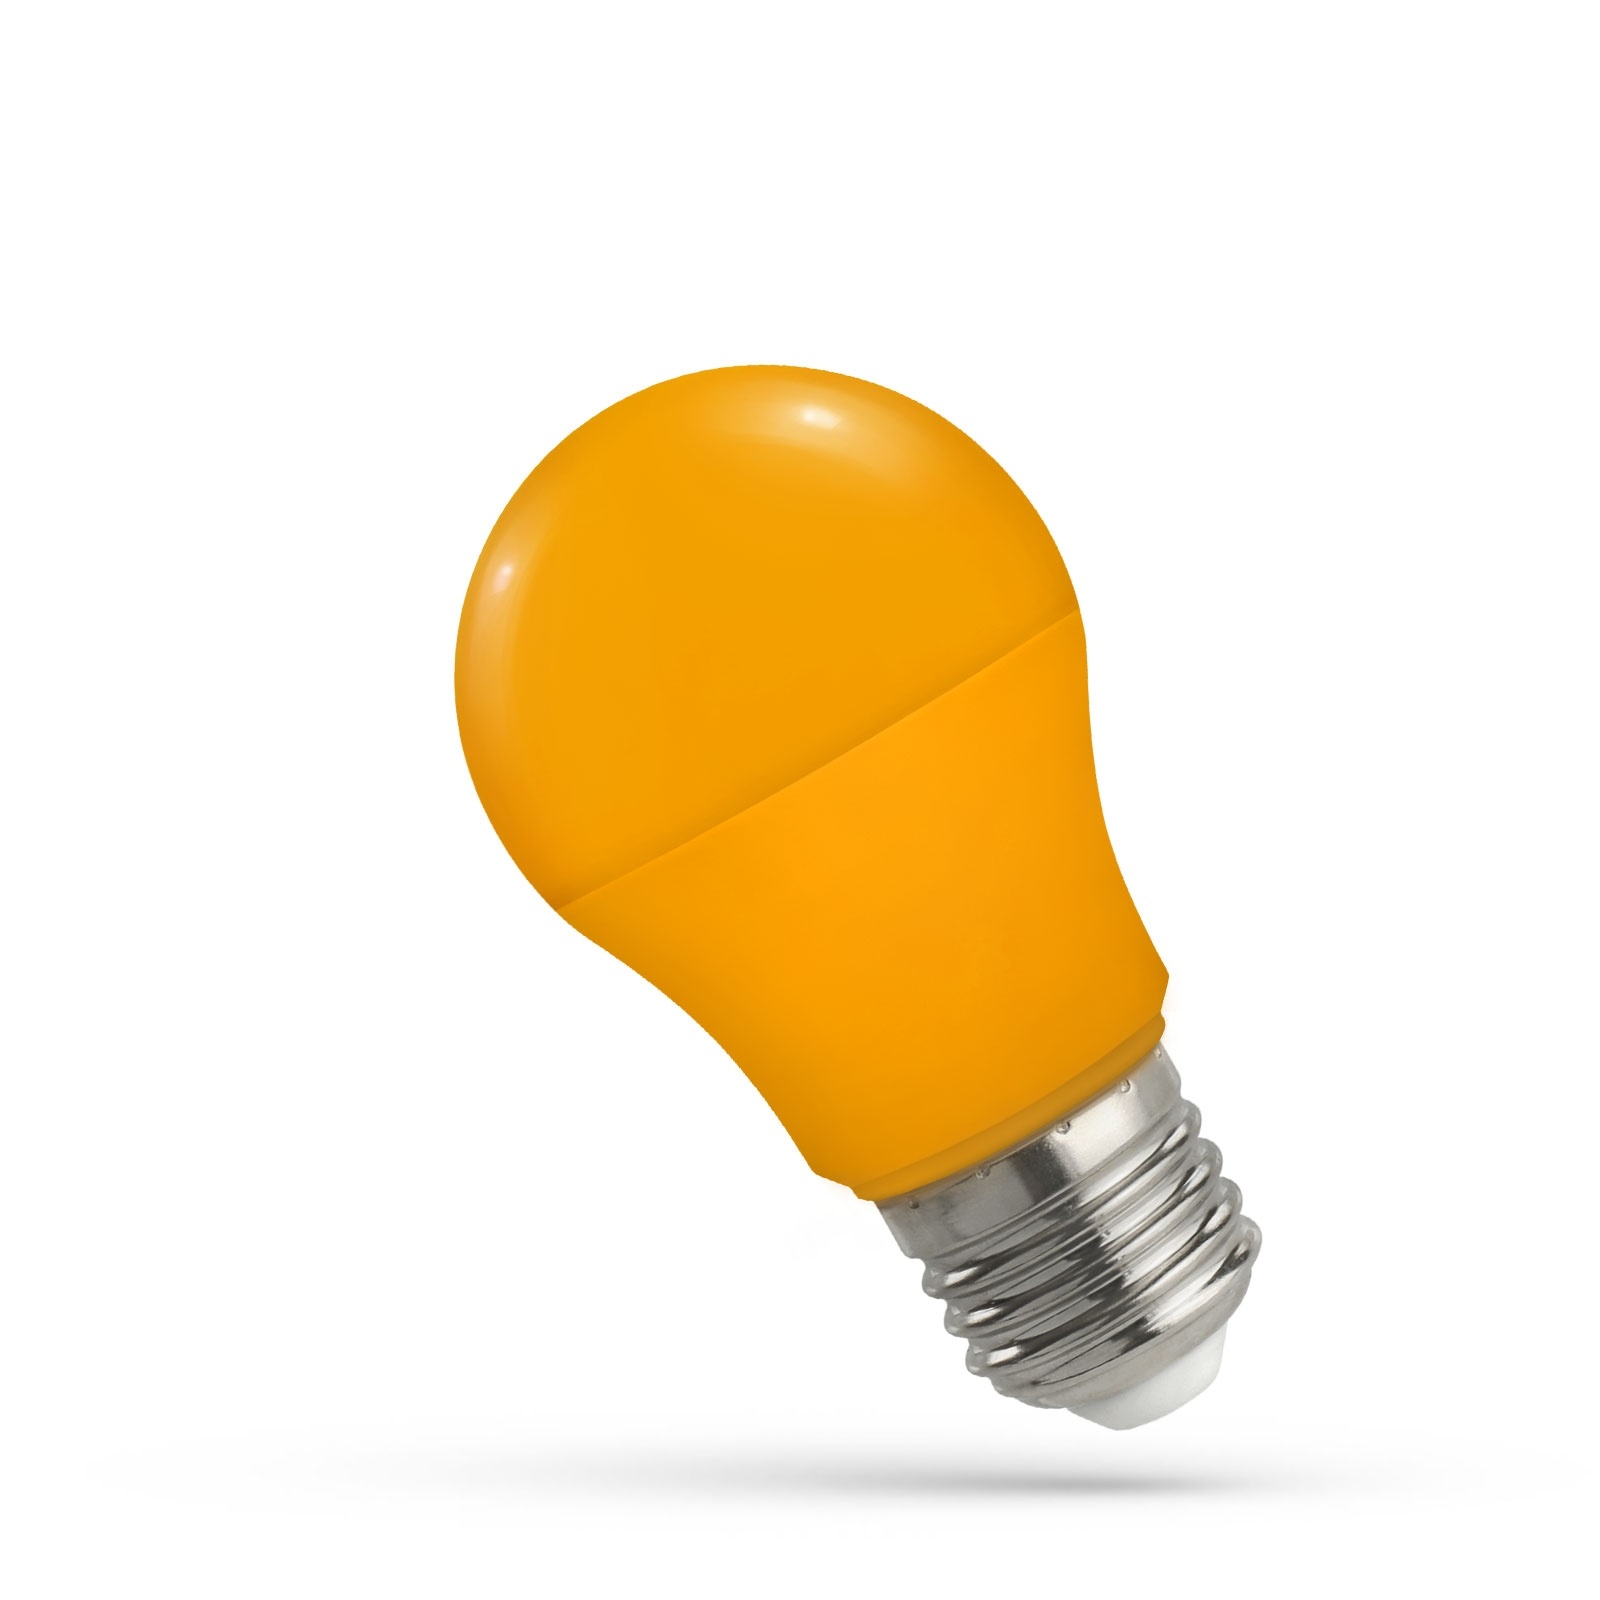 LED lamp - A50 - 5W - Oranje licht - Ledlichtdiscounter.nl